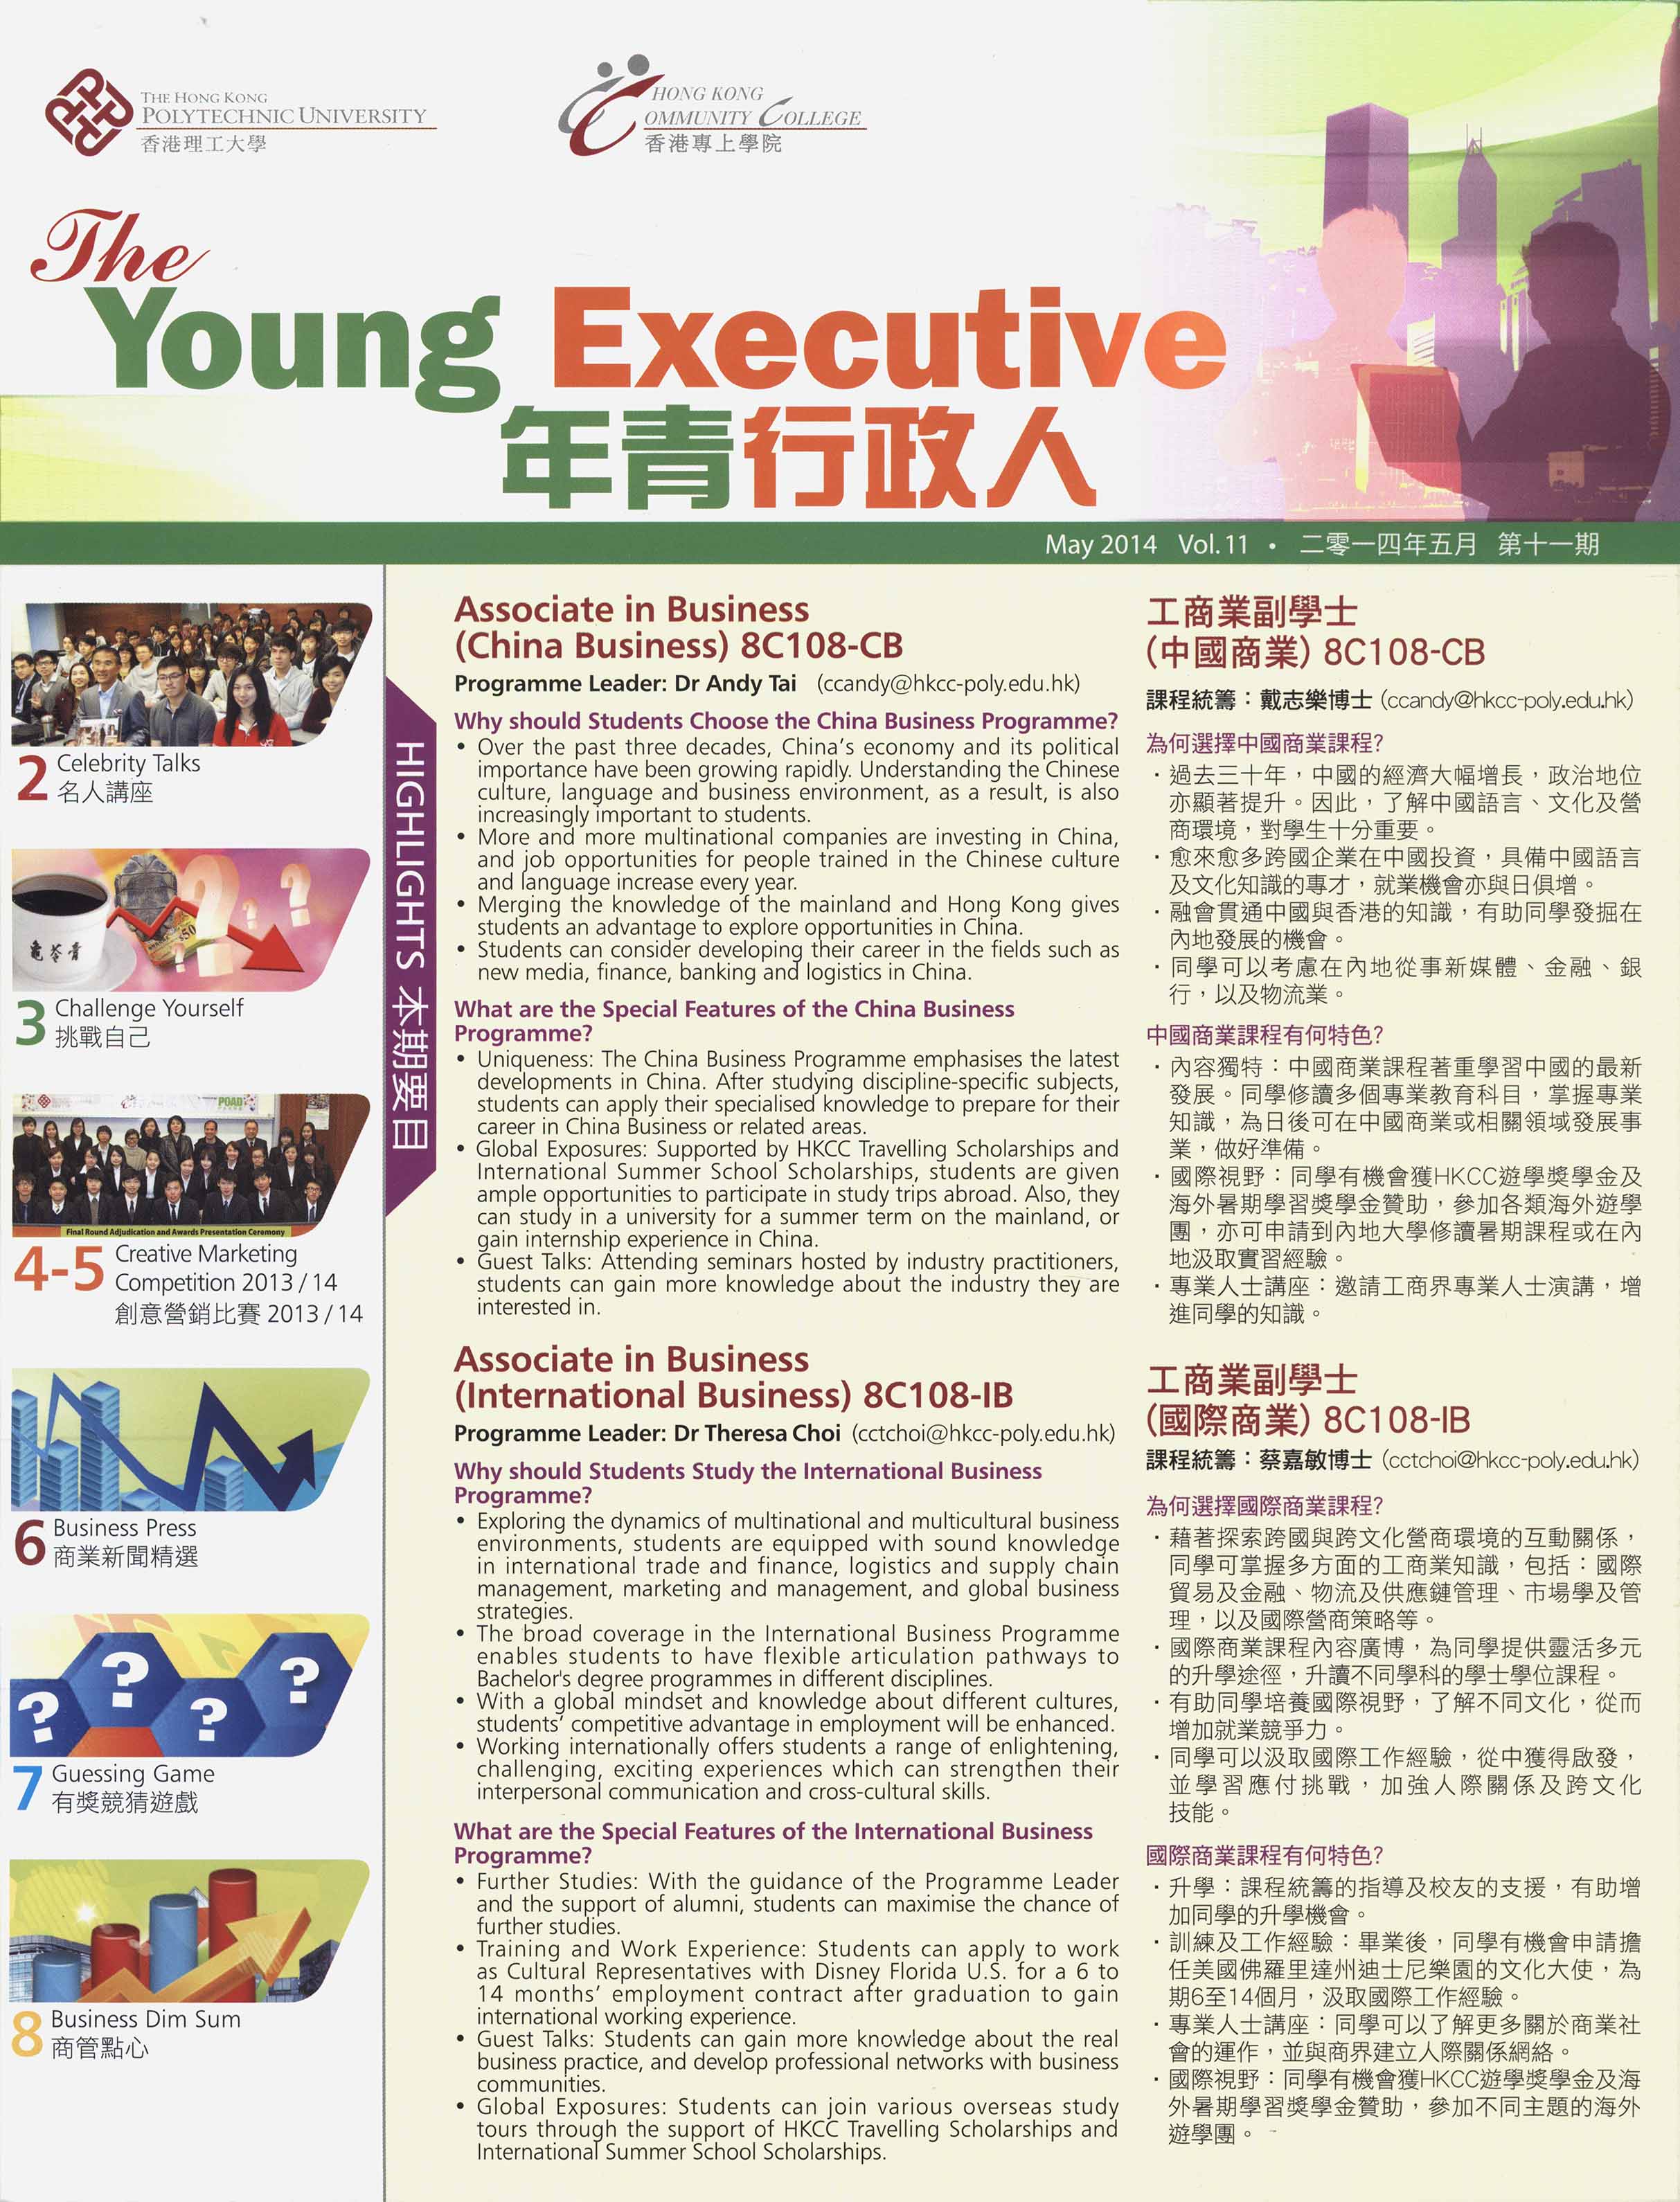 The Young executive. Vol. 11